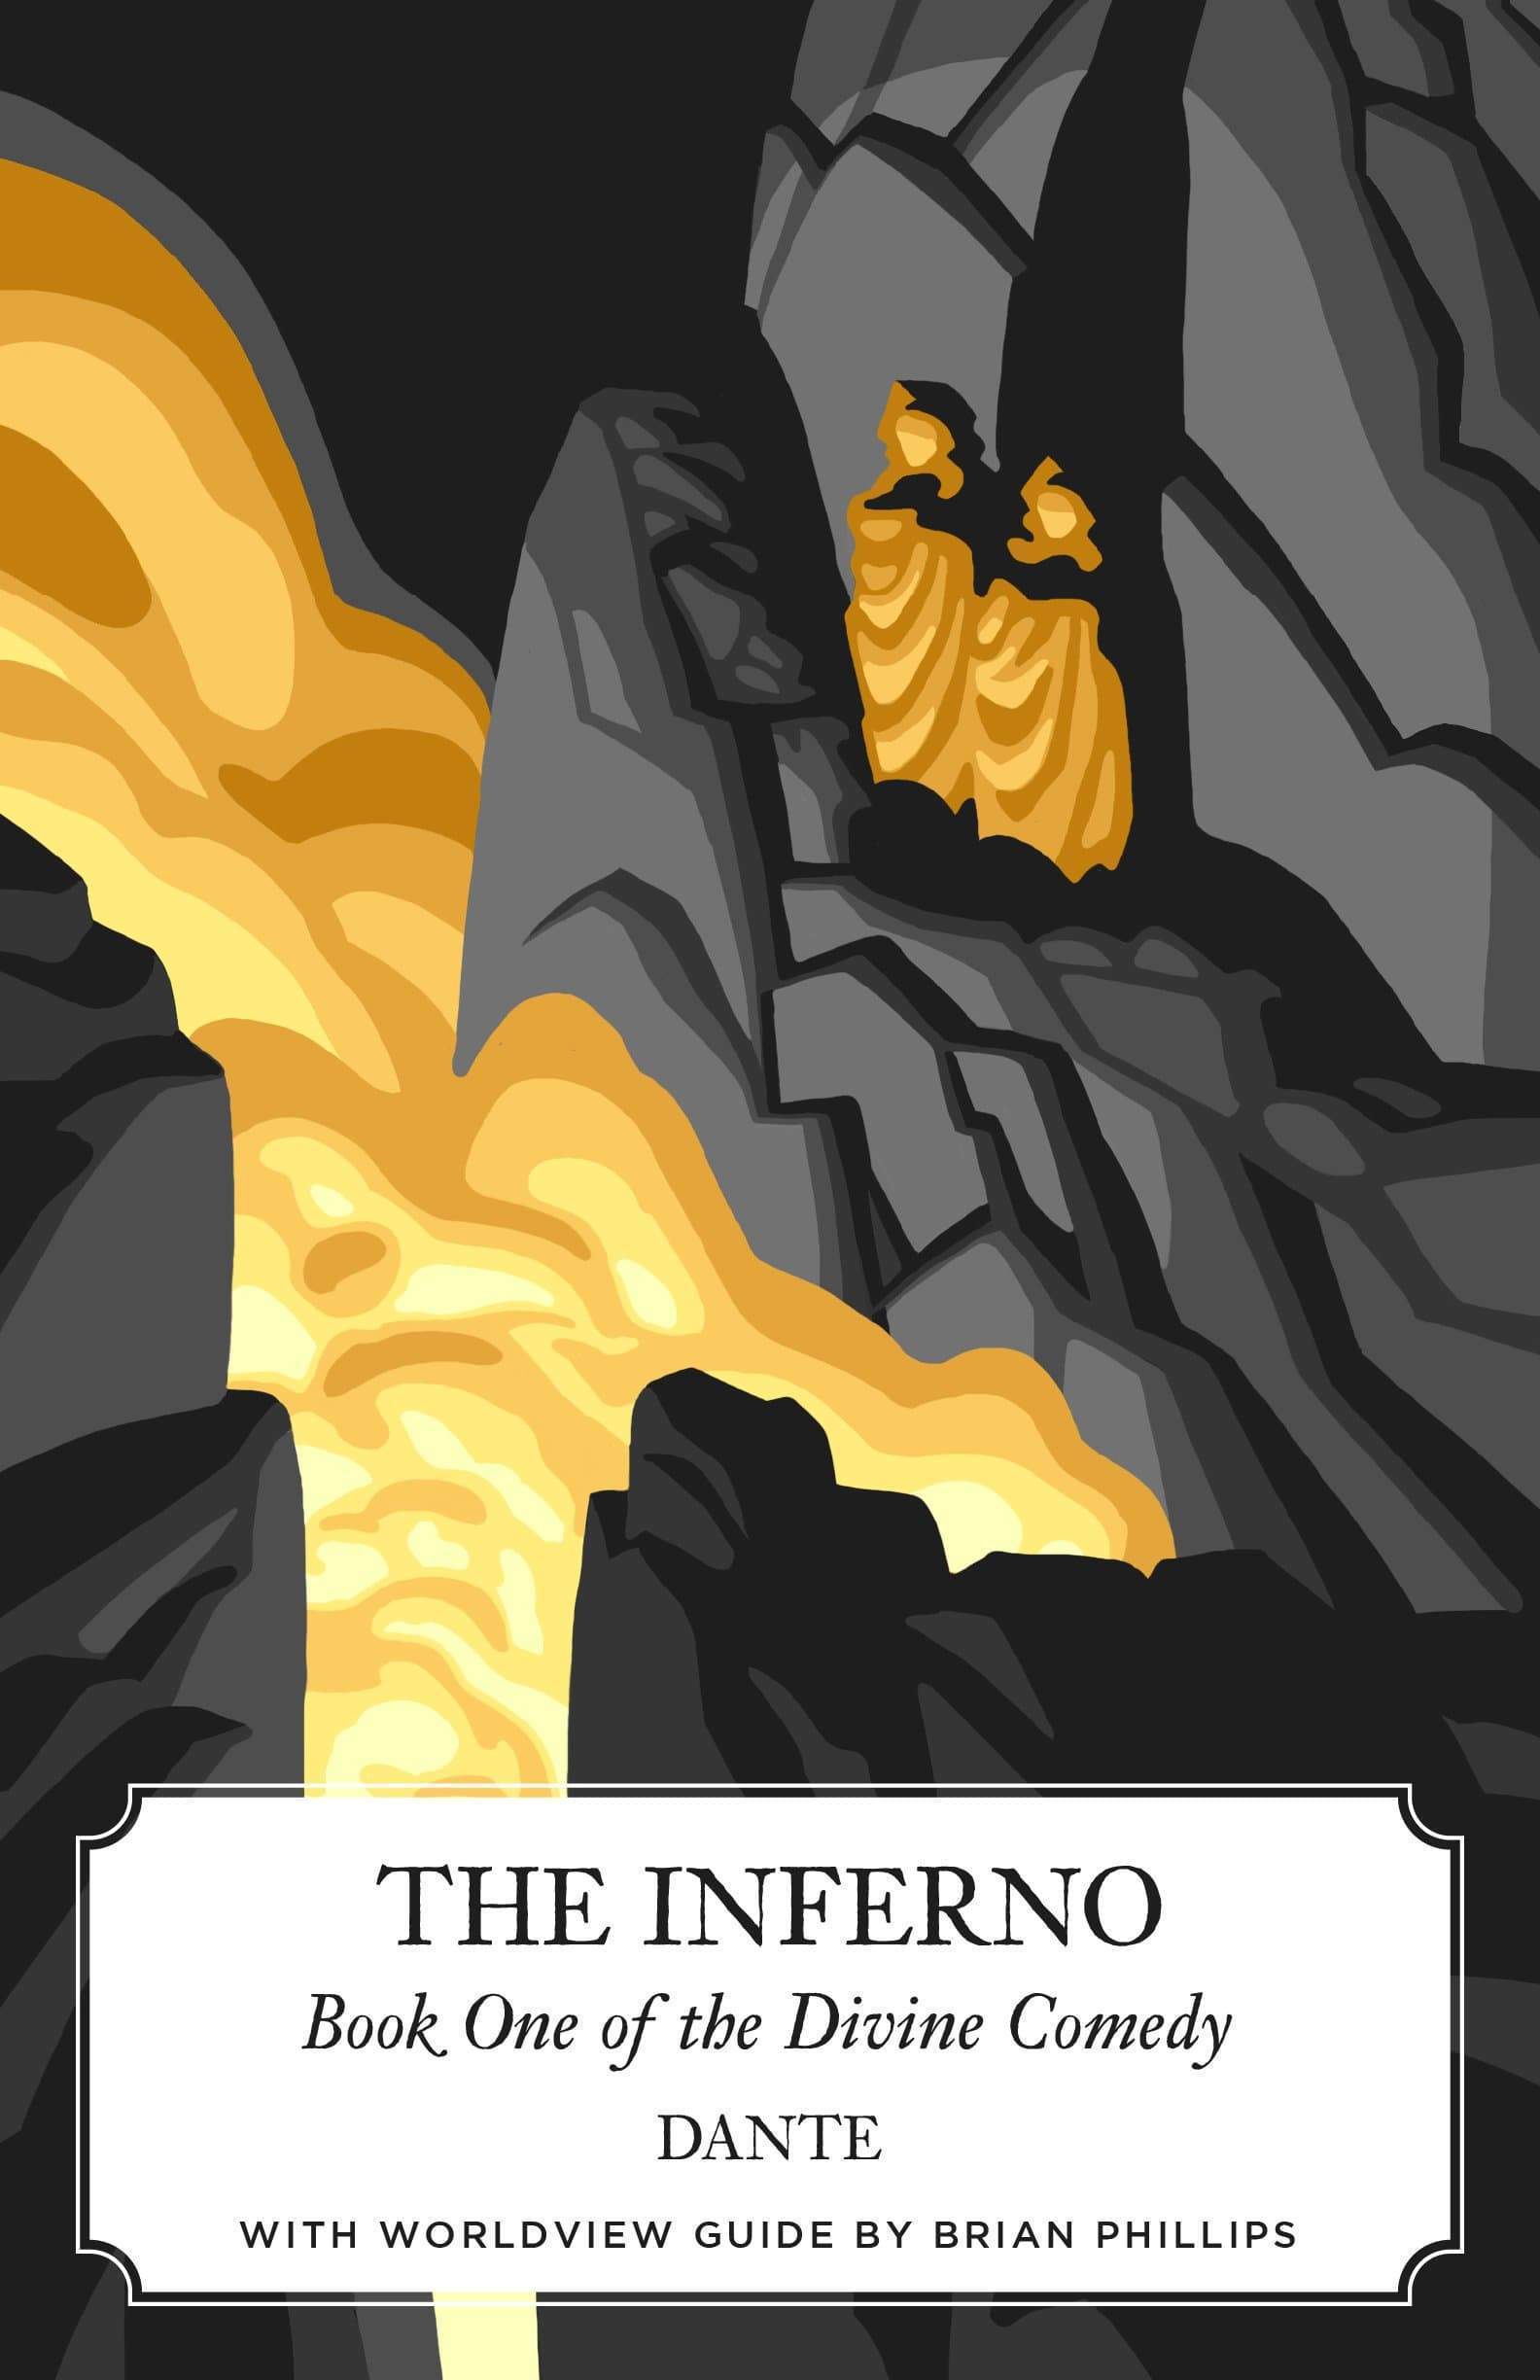 Dante's Inferno: I took high school English class, too